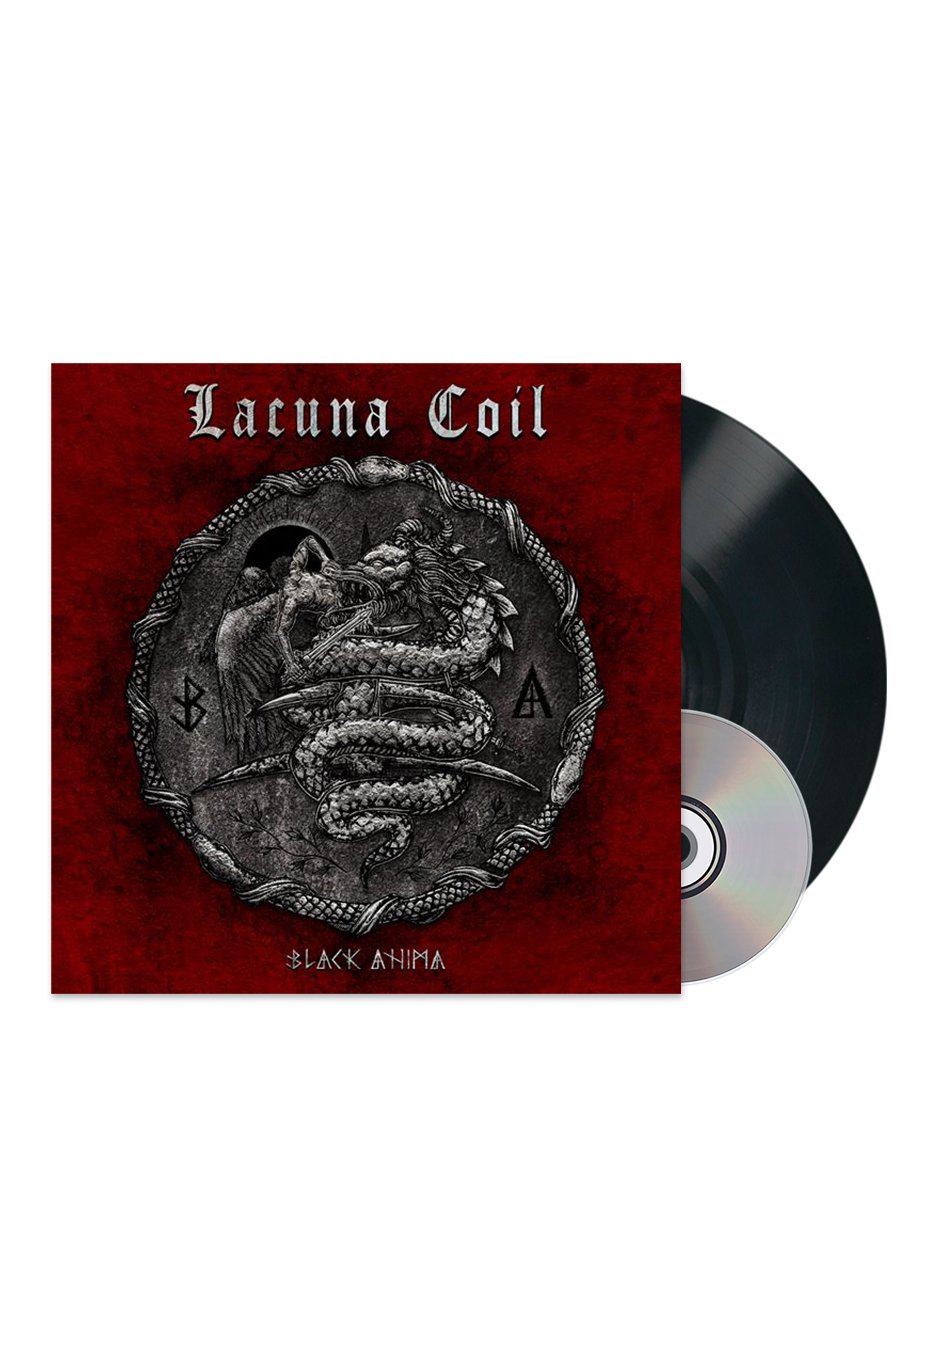 Lacuna Coil - Black Anima - Vinyl + CD